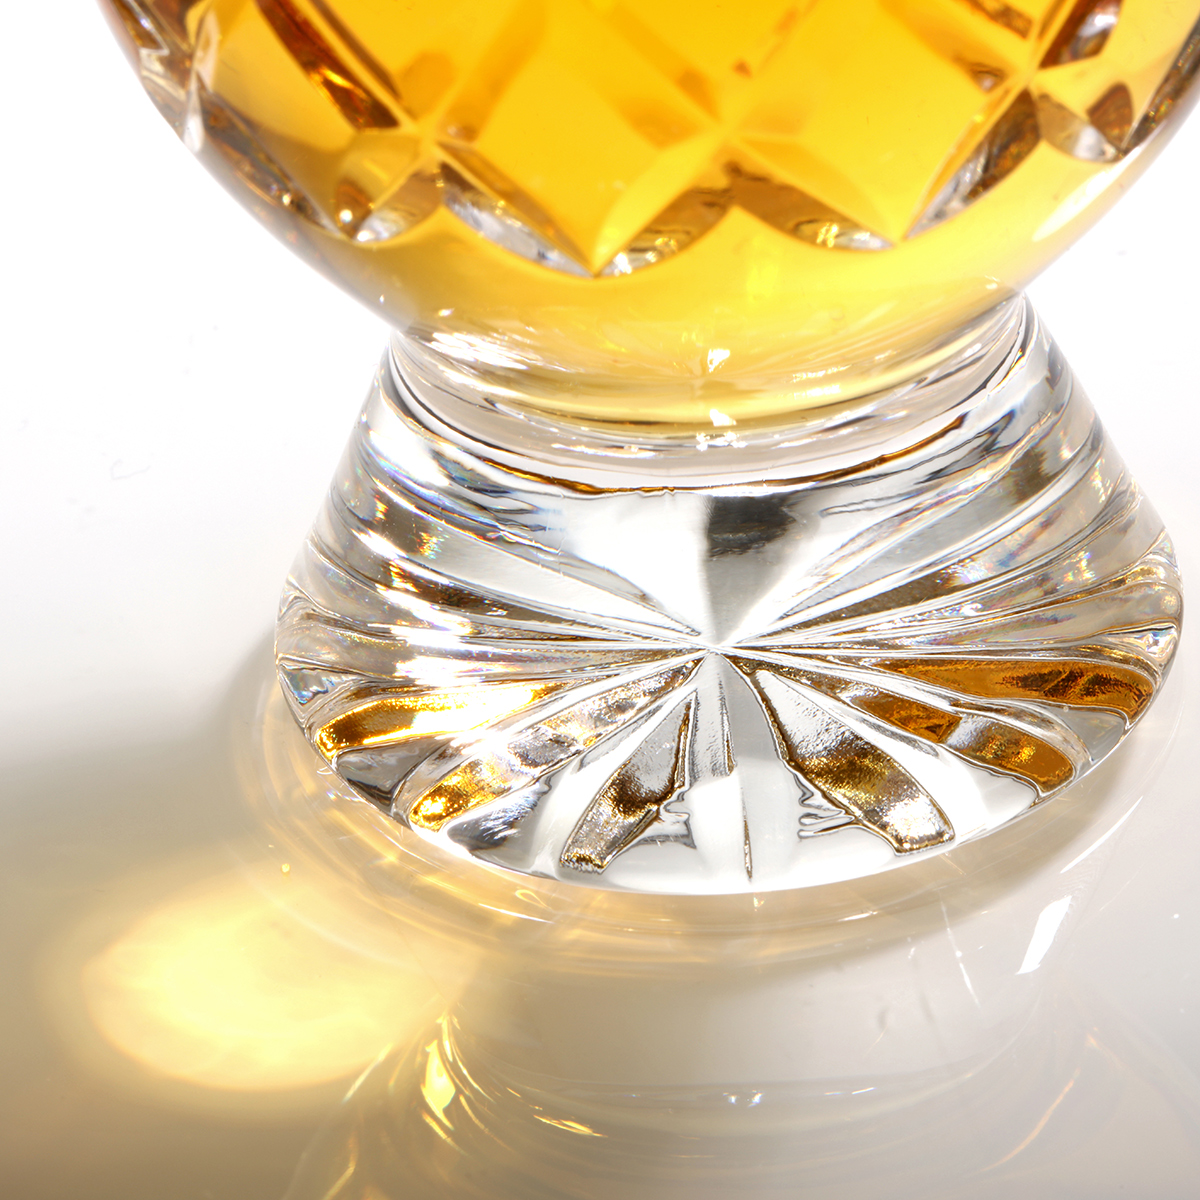 Glencairn Cut Kristall Whisky Tasting Glas mit Diamantschliff